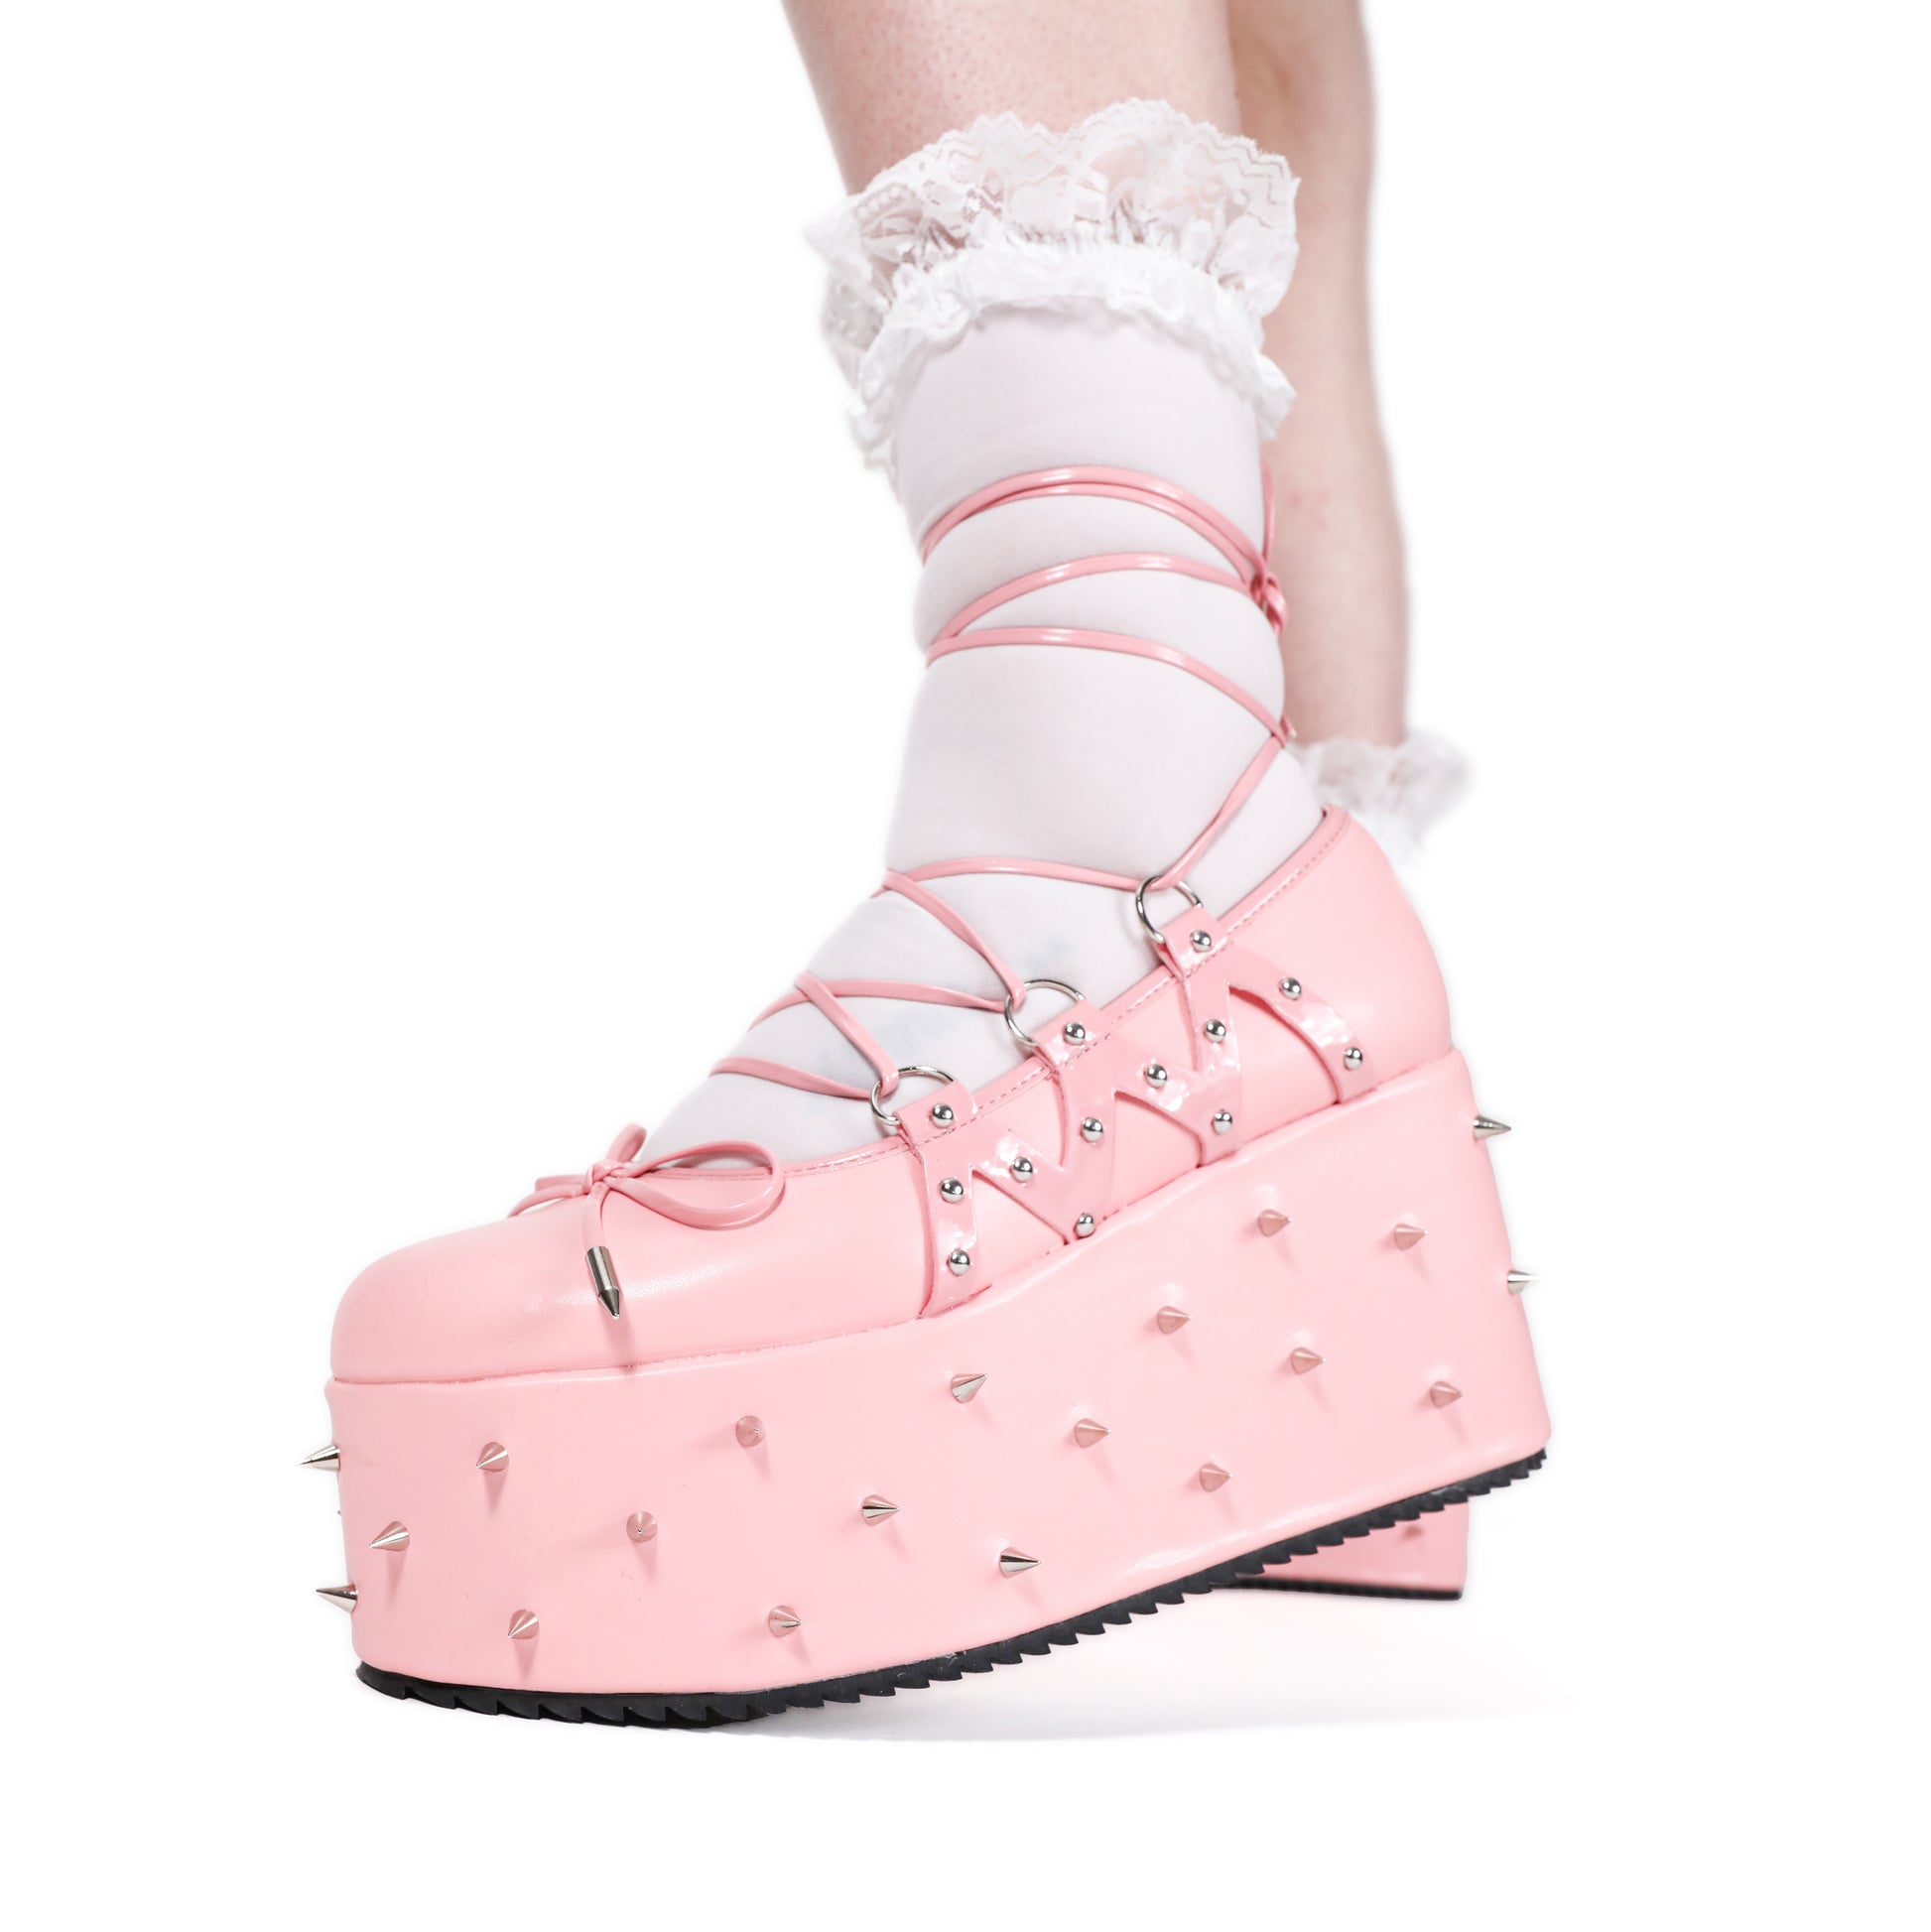 Zorina Lace Up Platform Ballet Shoes - Pink - Koi Footwear - Front Side View